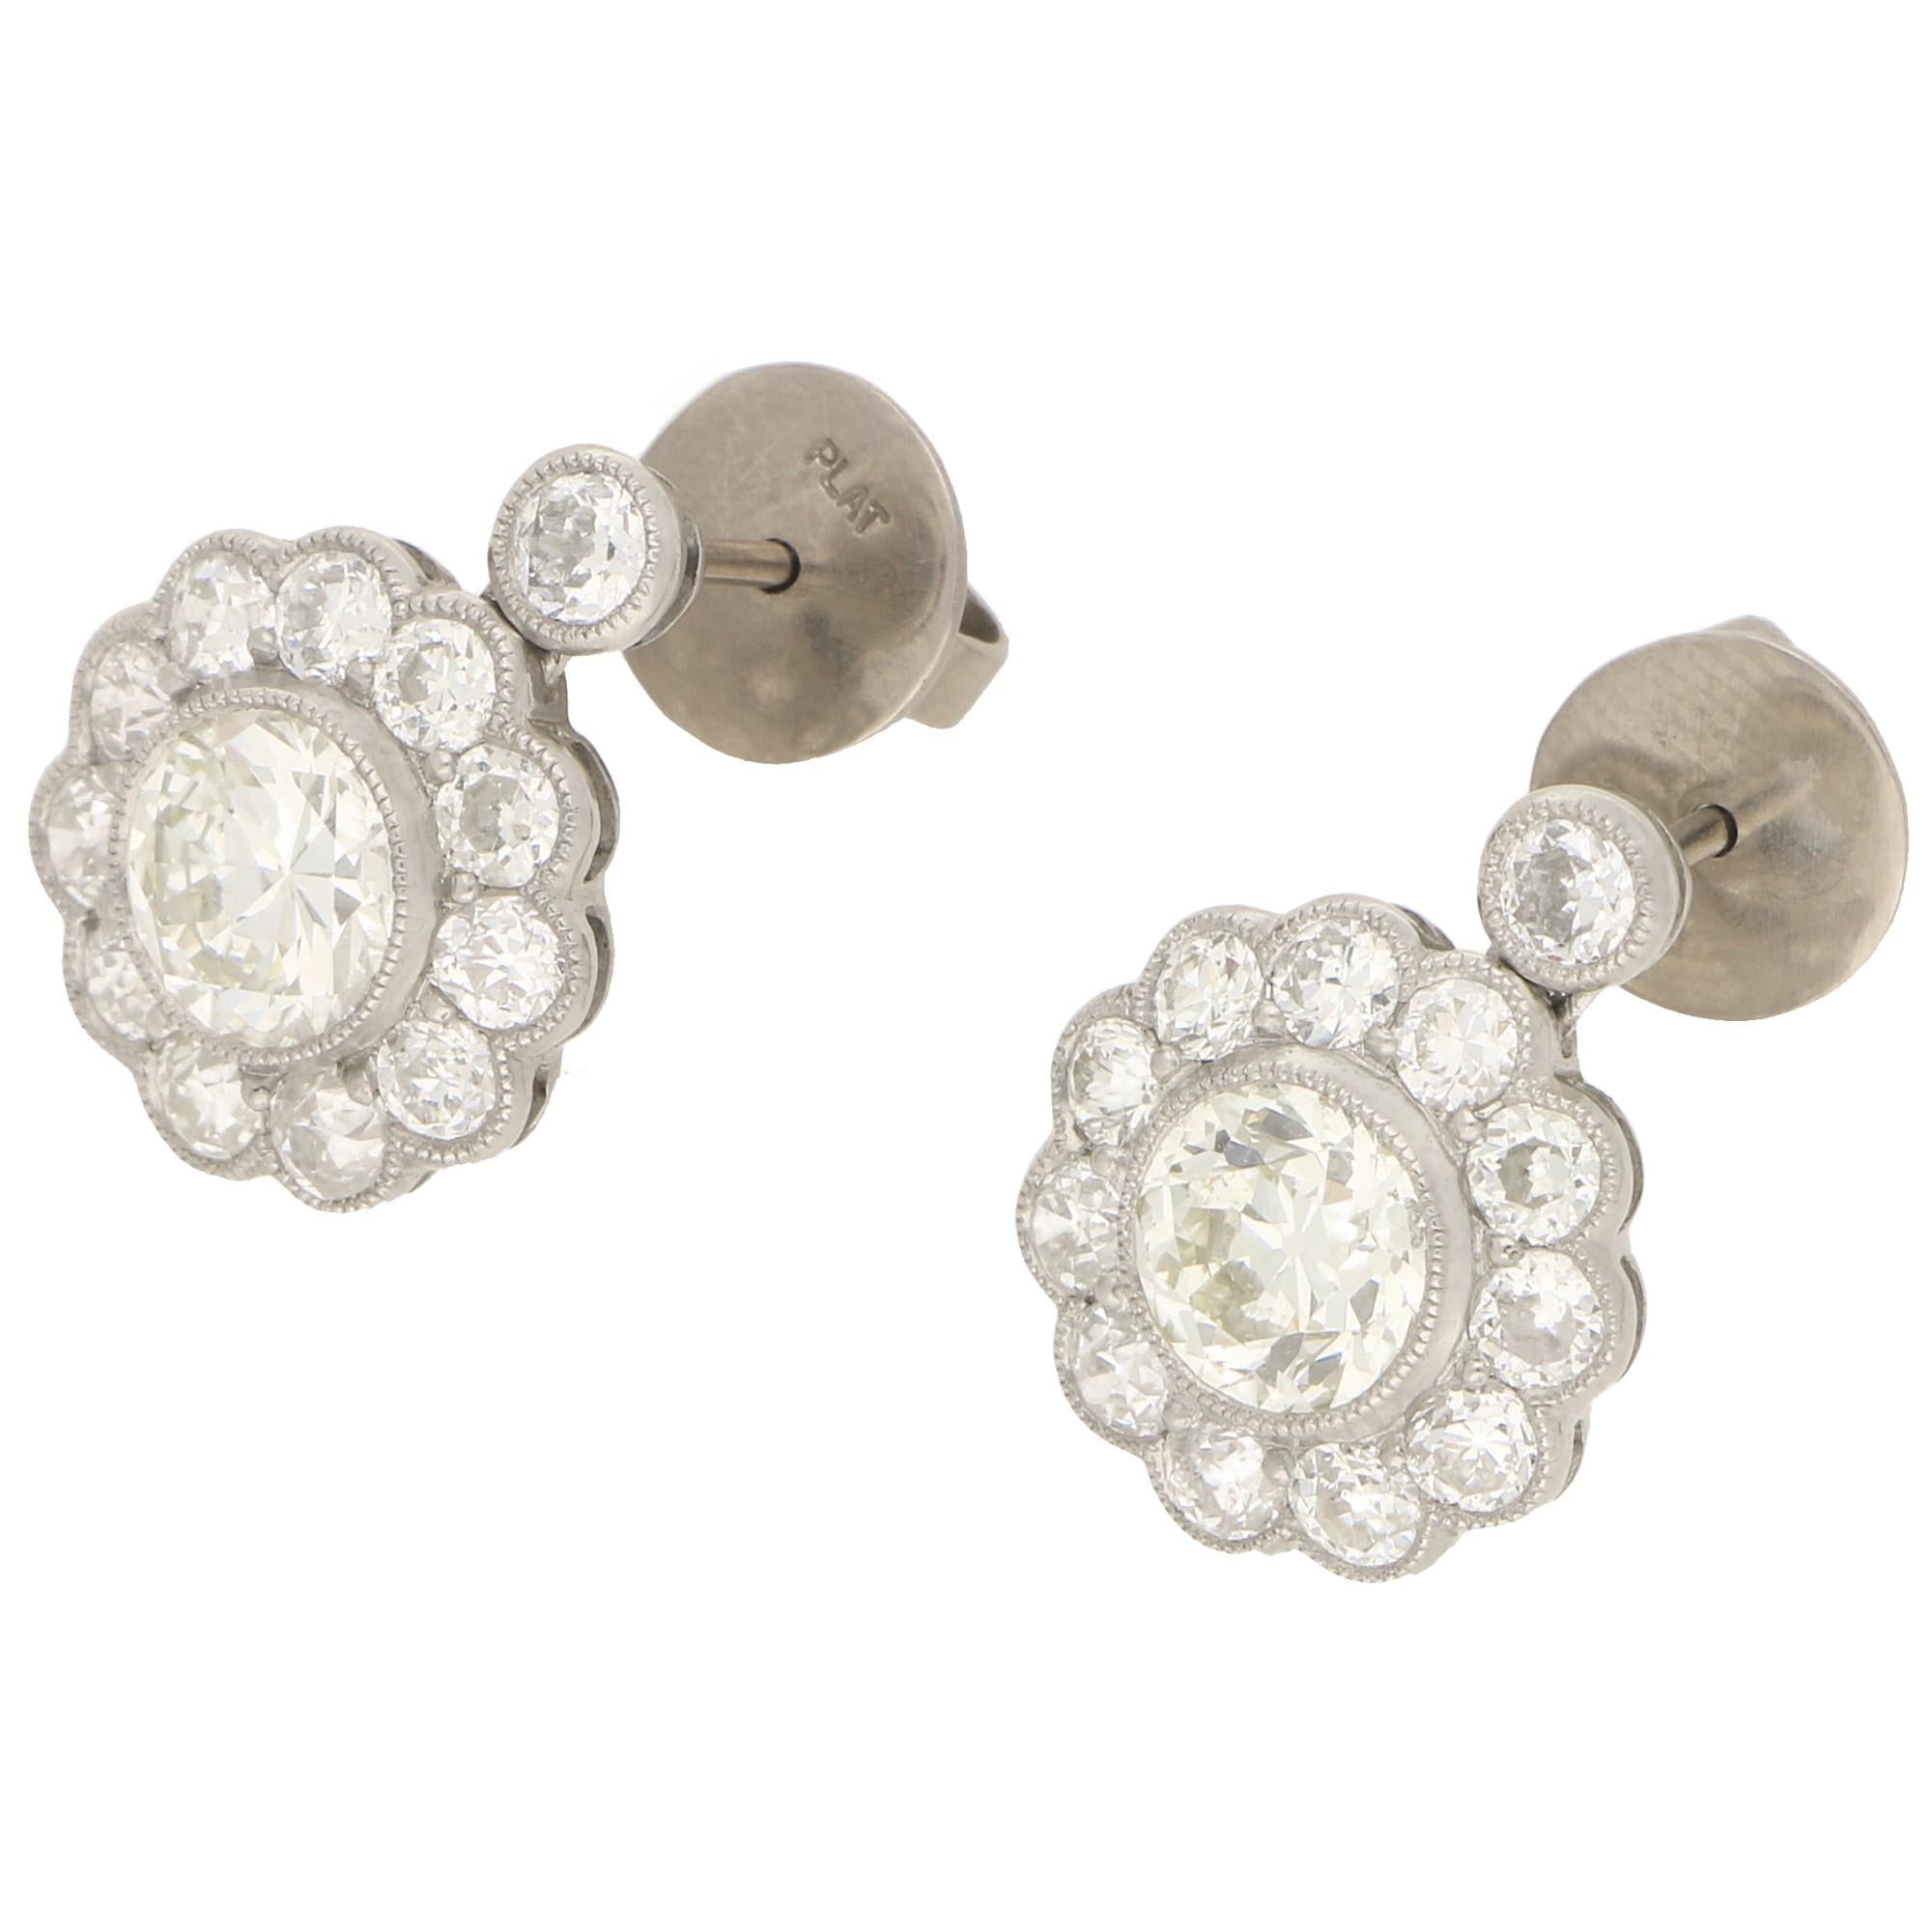 Women's or Men's Art Deco Style Old European Cut Diamond Cluster Earrings Set in Platinum